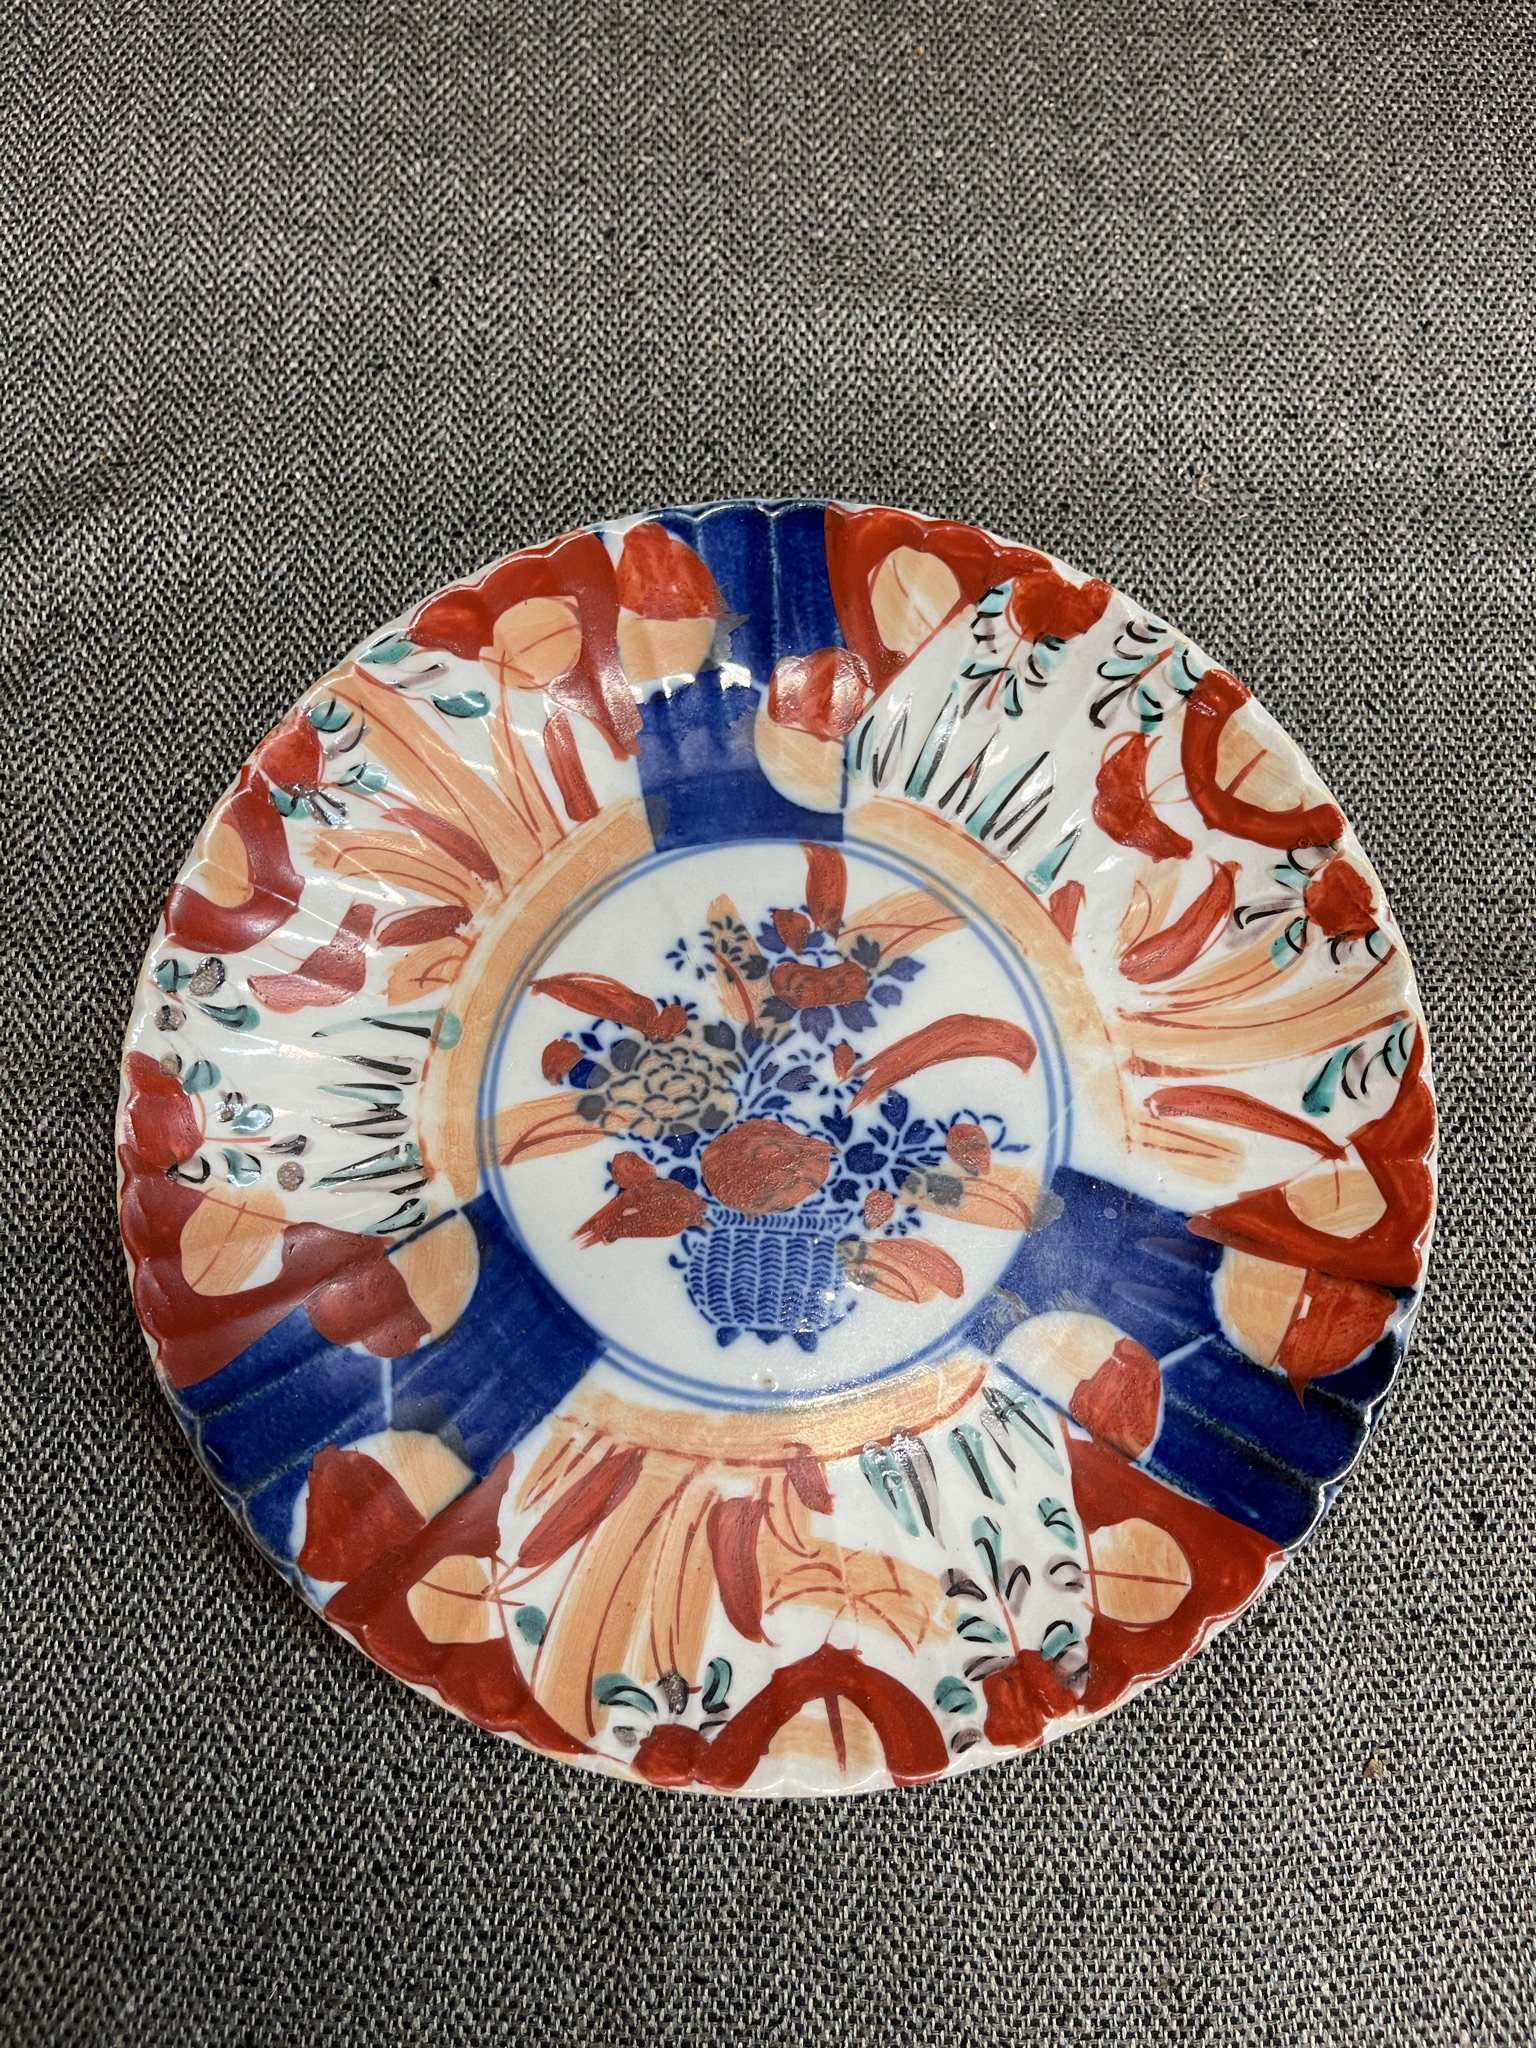 Imari shallow bowl. 8 1/2 diameter in traditional Imari fashion. Cobalt and red encircle the focal design. Beautiful condition!